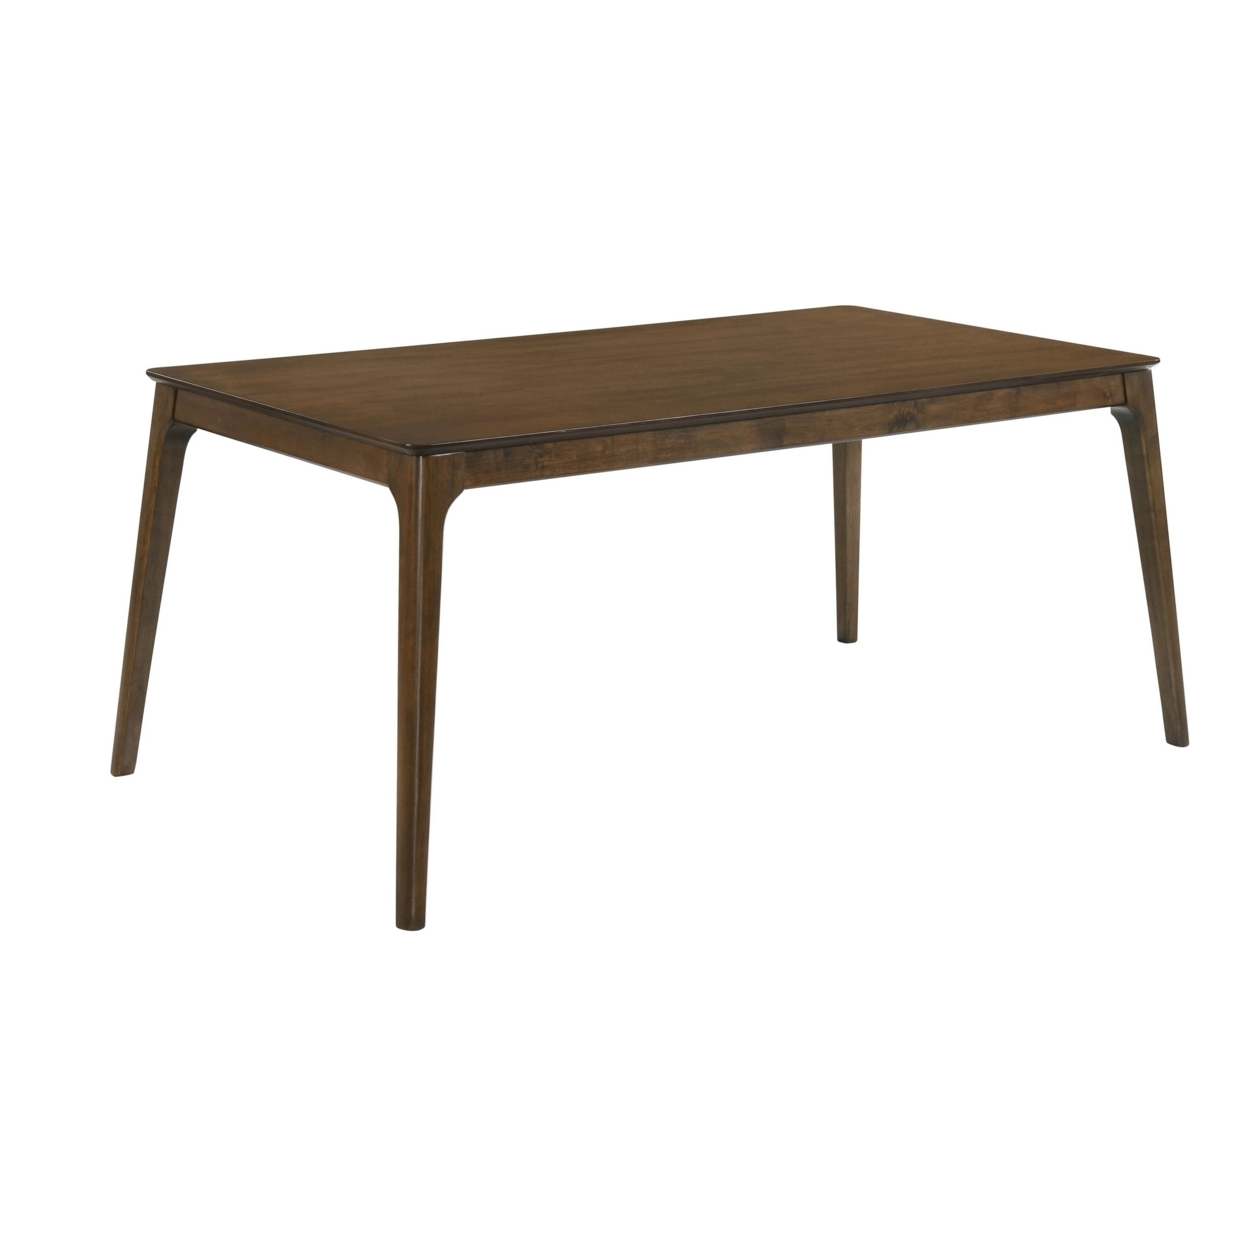 Nick 66 Inch Modern Dining Table, Rubberwood, Angled Legs, Walnut Brown- Saltoro Sherpi